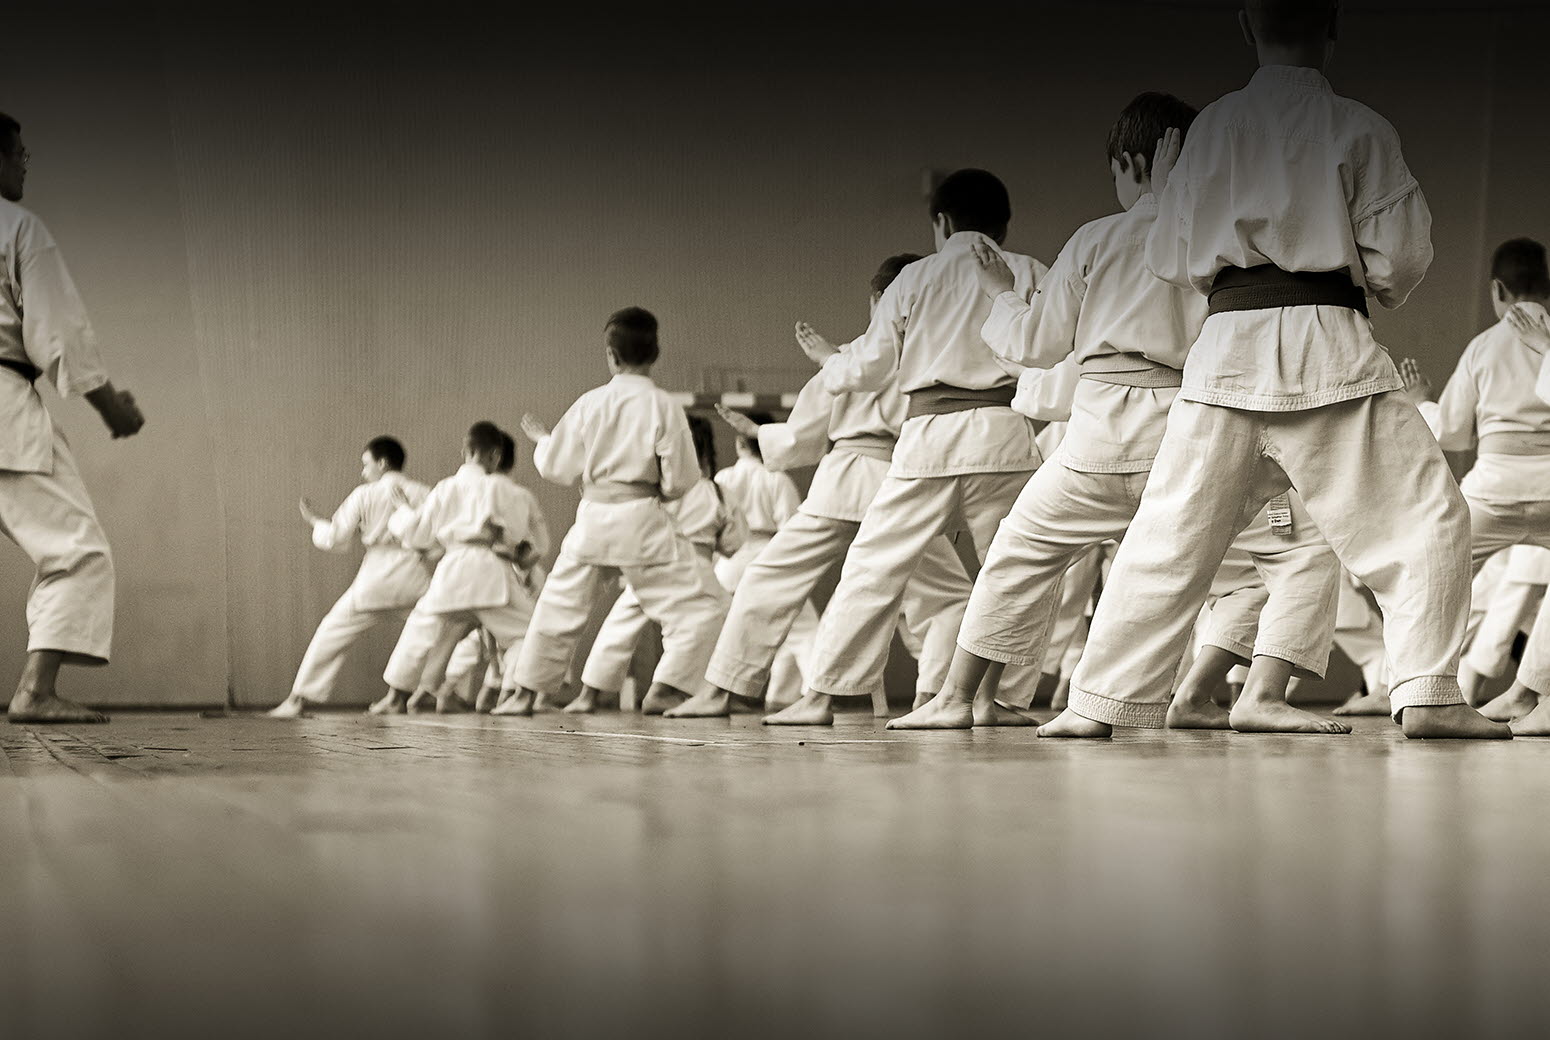 Training Karate athletes